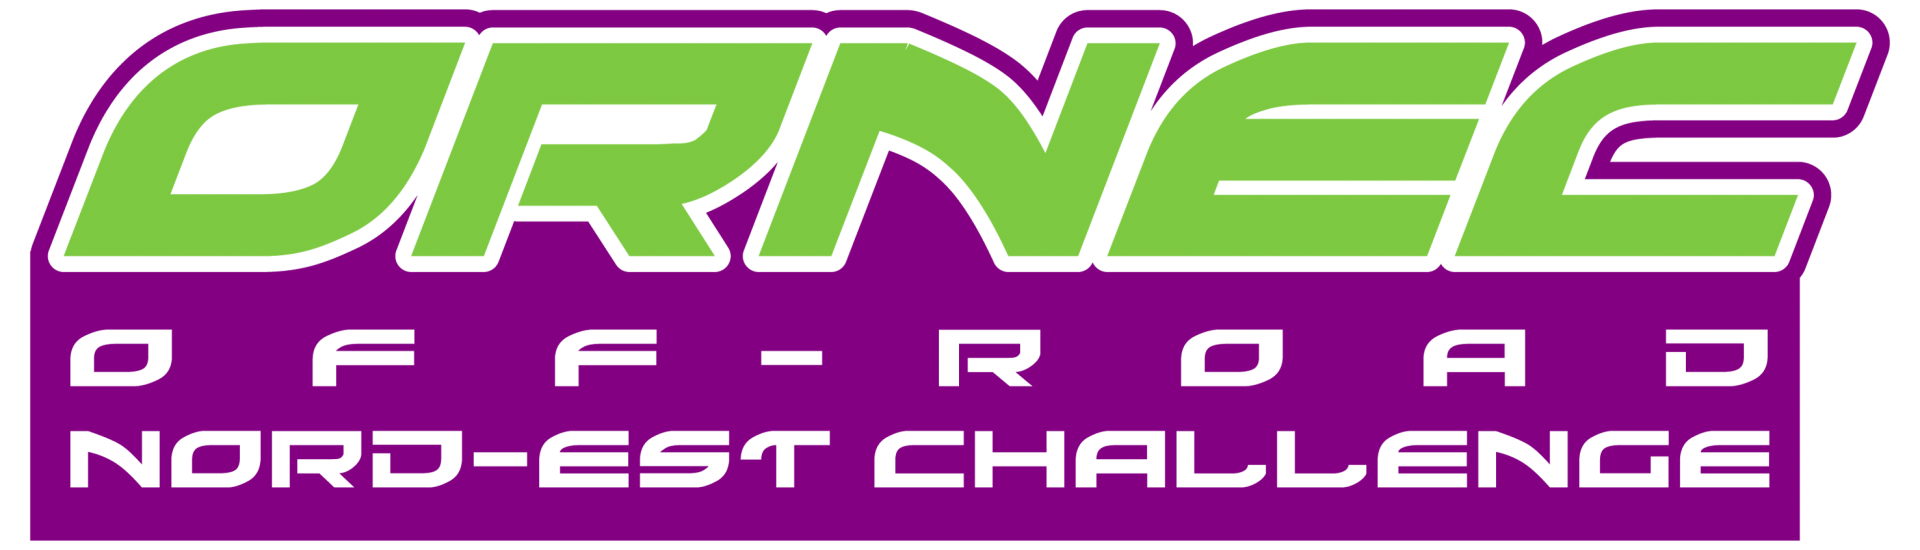 challenge-ornec